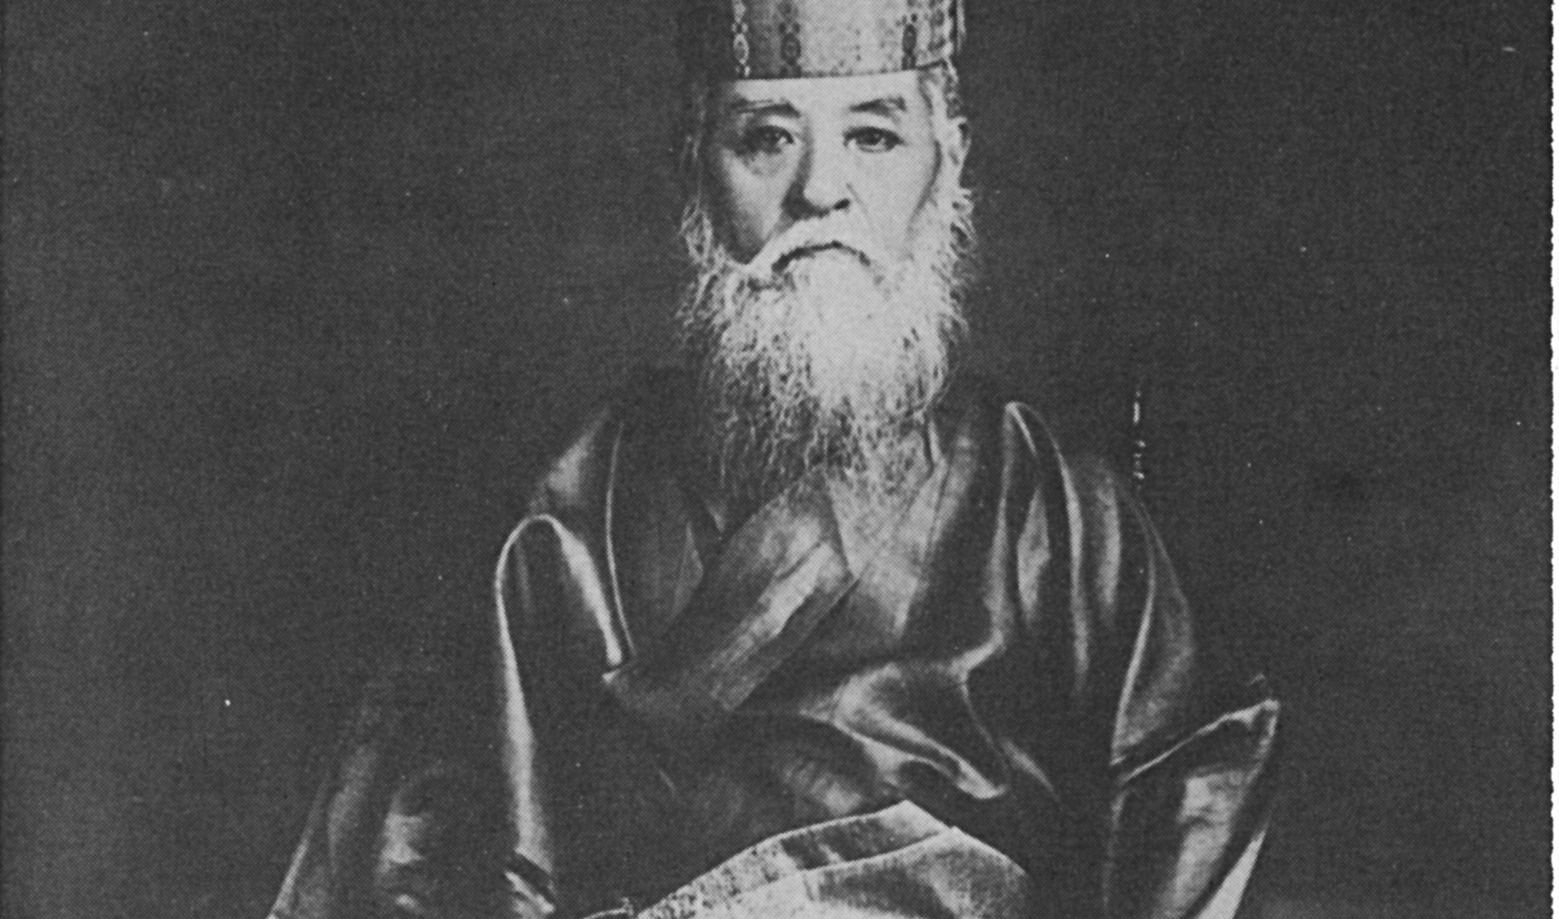 Yoshimura Chōgi around 1941, wearing the formal dress of an Aji.